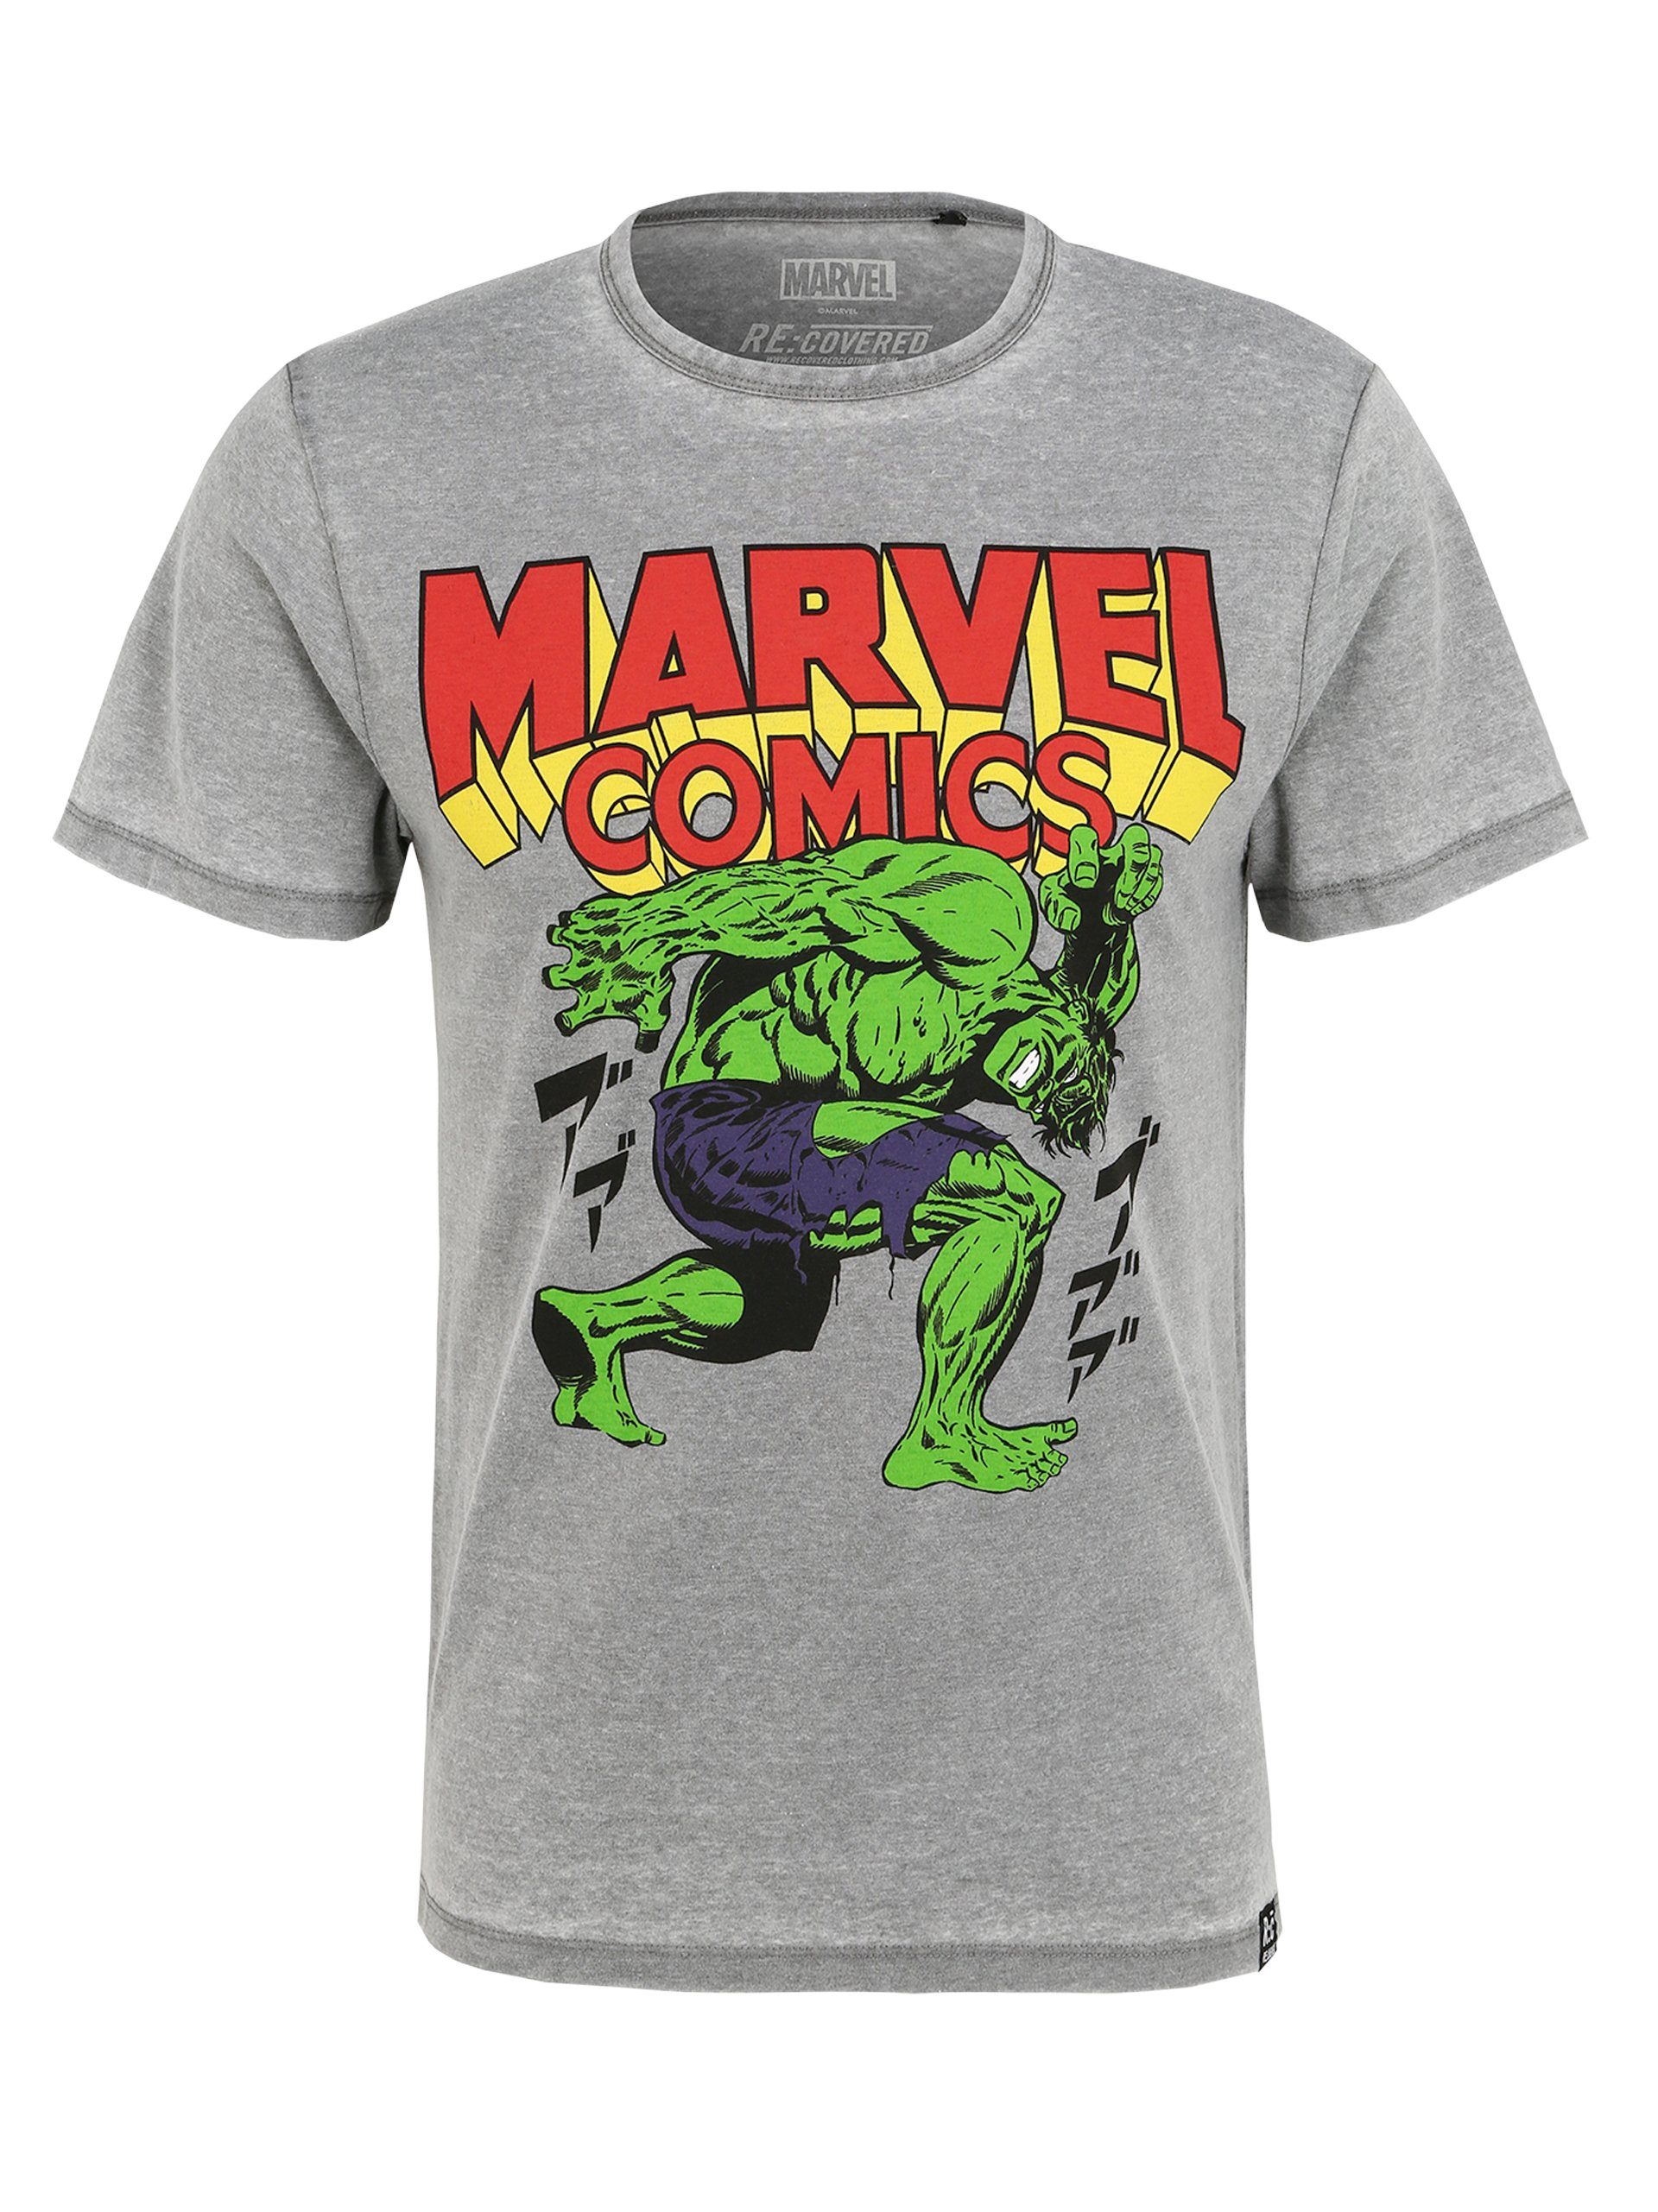 Hellgrau Japan Comics Marvel Recovered Bio-Baumwolle Washed Hulk GOTS zertifizierte T-Shirt